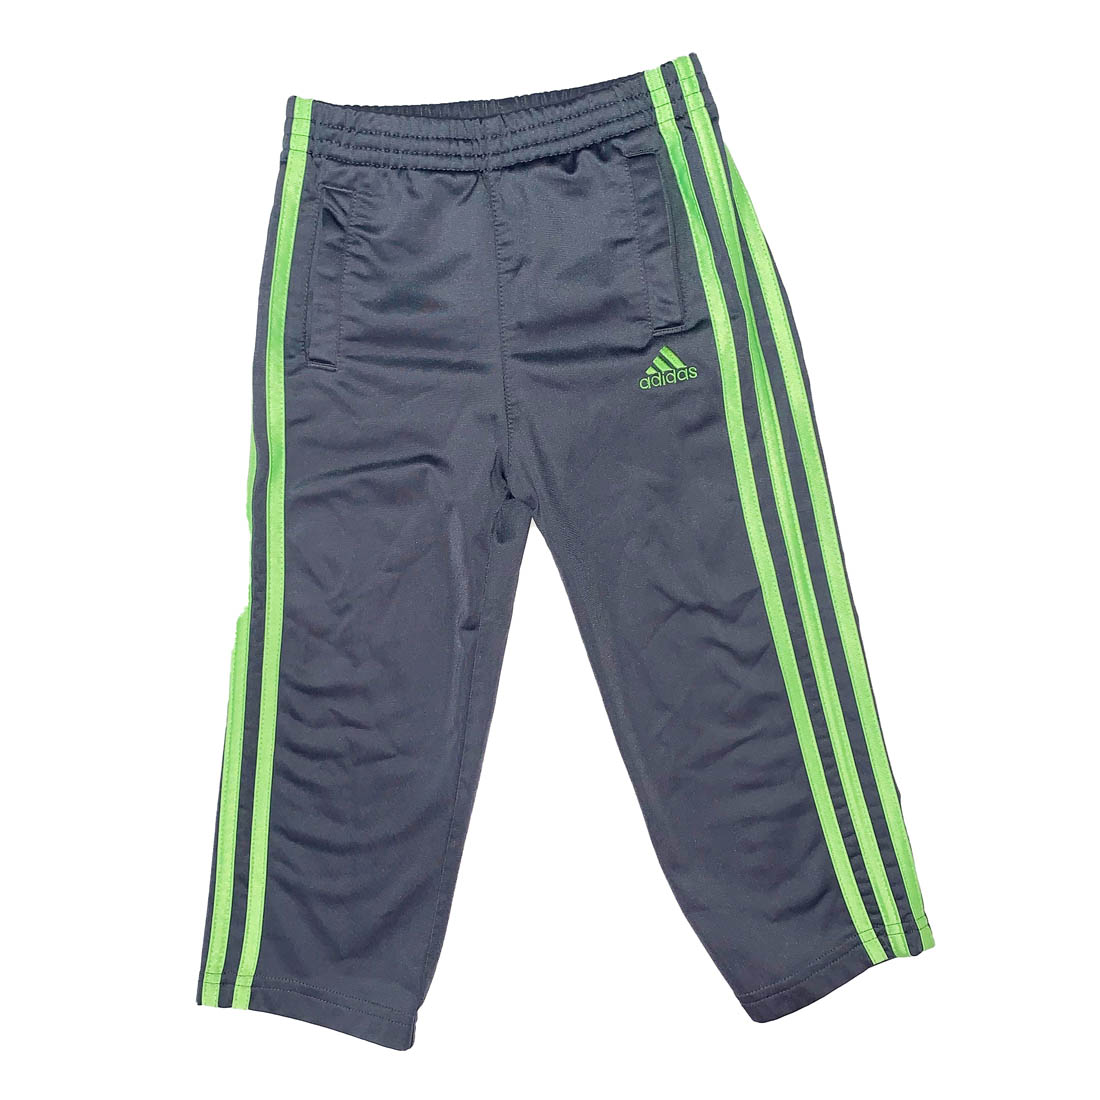 Boys Adidas sweat pants | Adidas sweatpants, Sweatpants, Pants